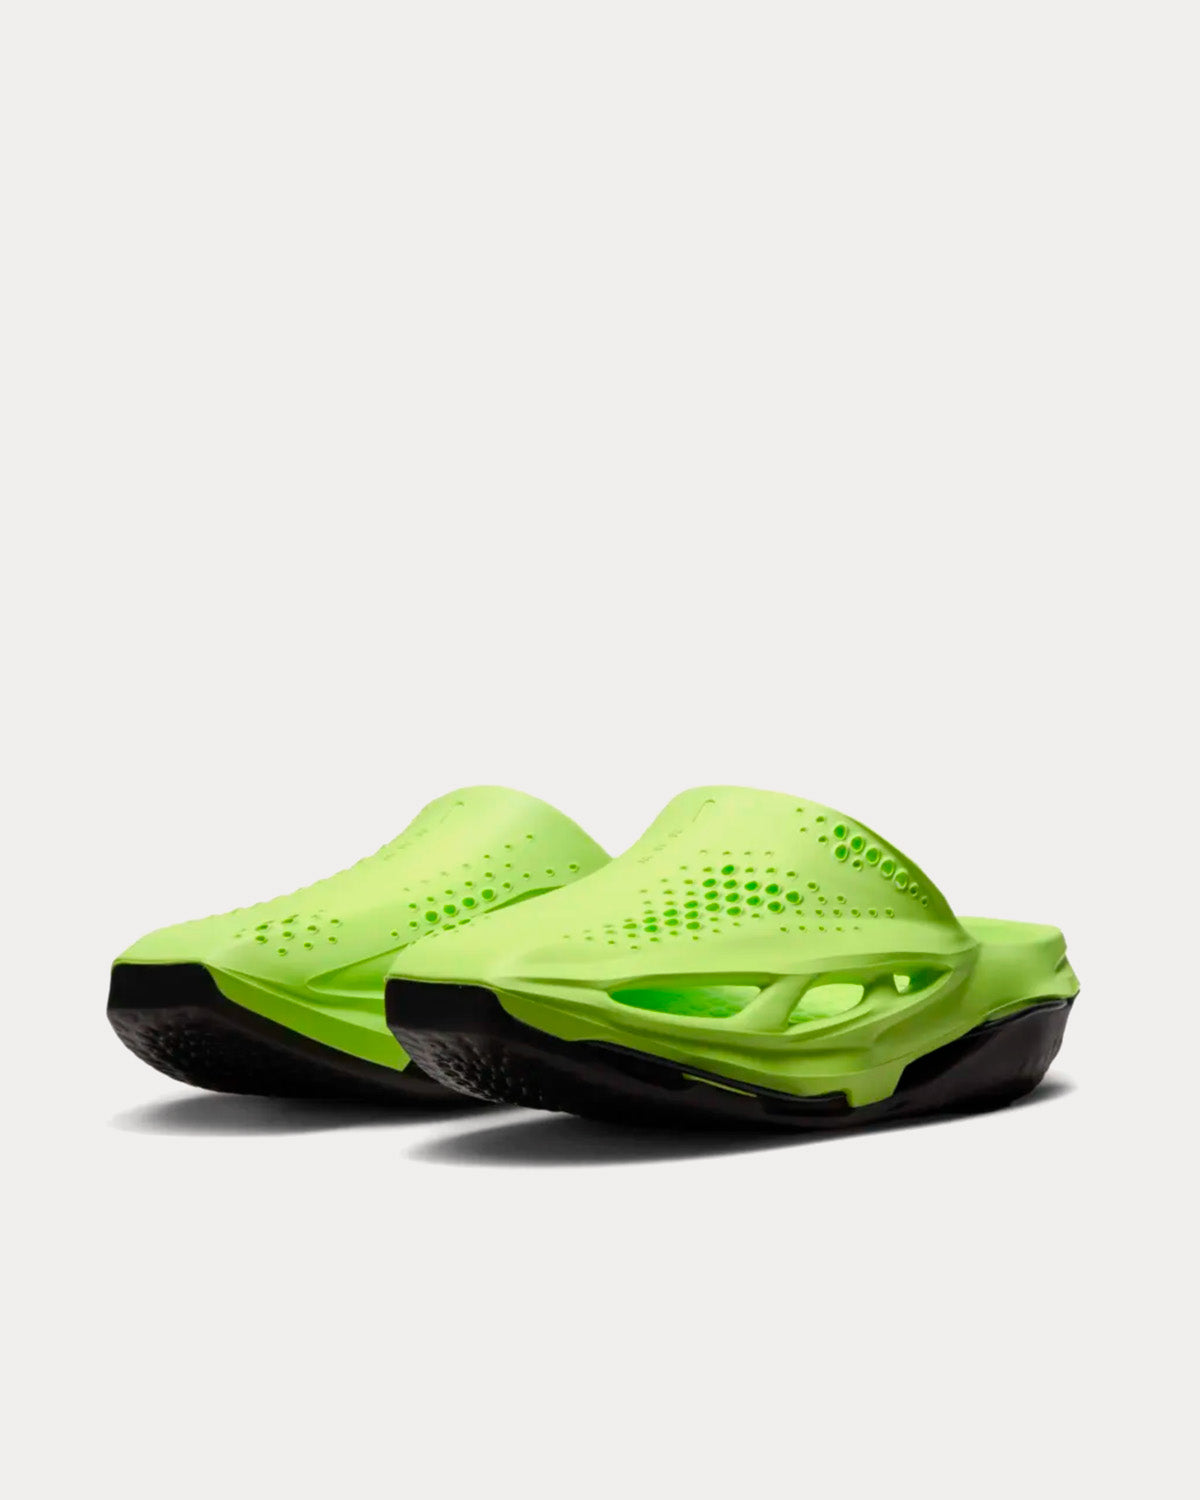 Nike x MMW - 005 Pure Volt Slides